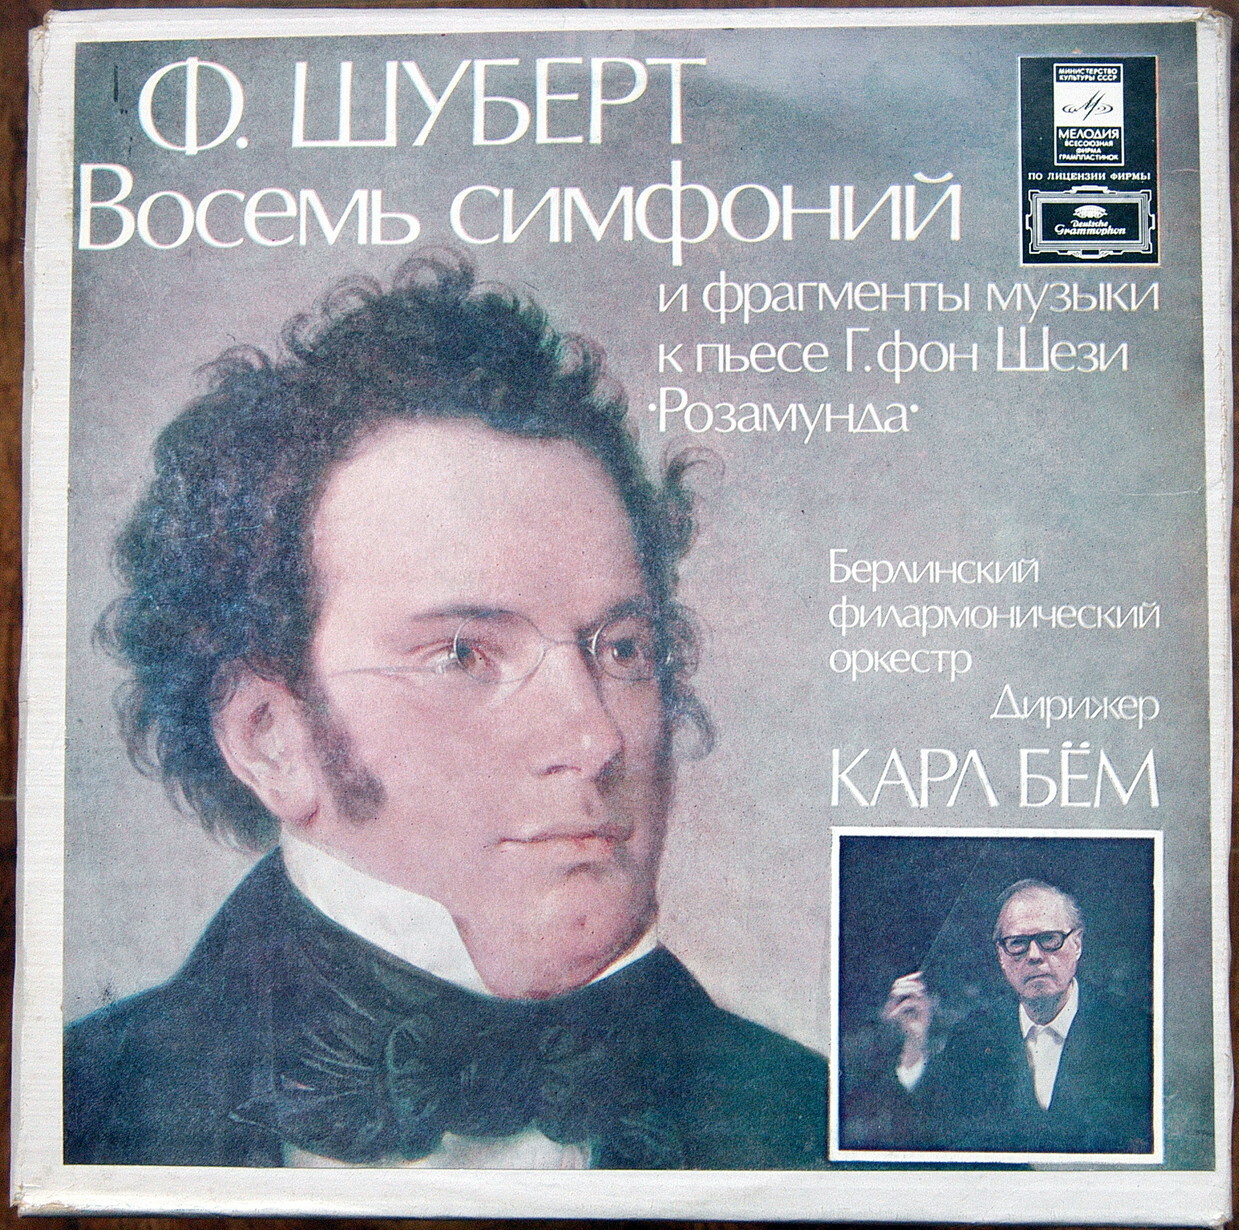 Ф. ШУБЕРТ (1797 - 1828)